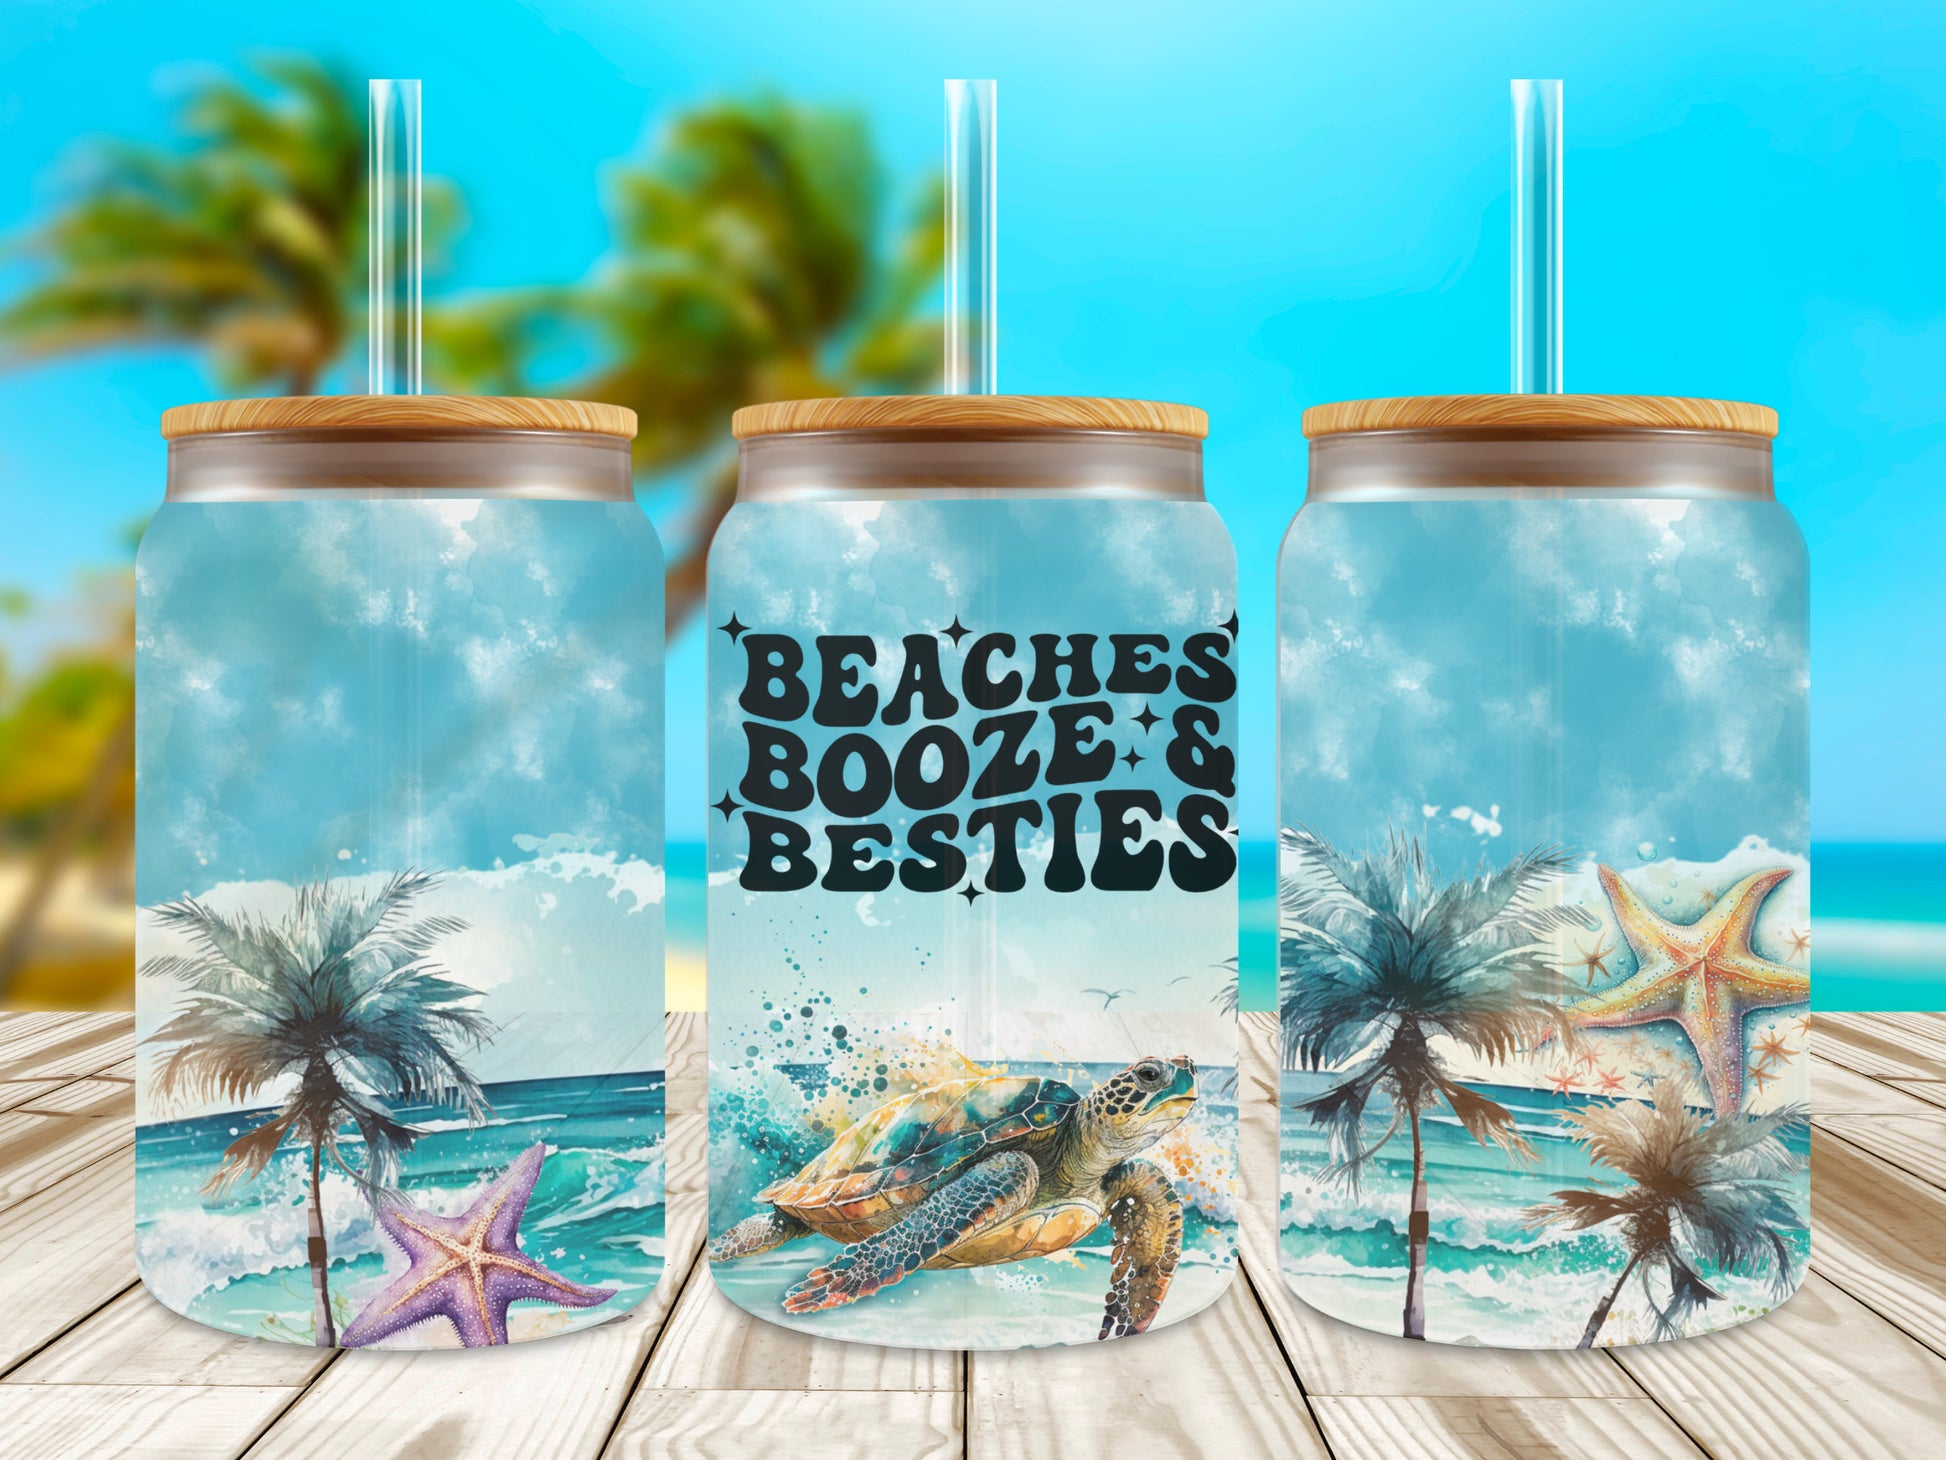 Beaches, Booze and Besties Glass Tumbler